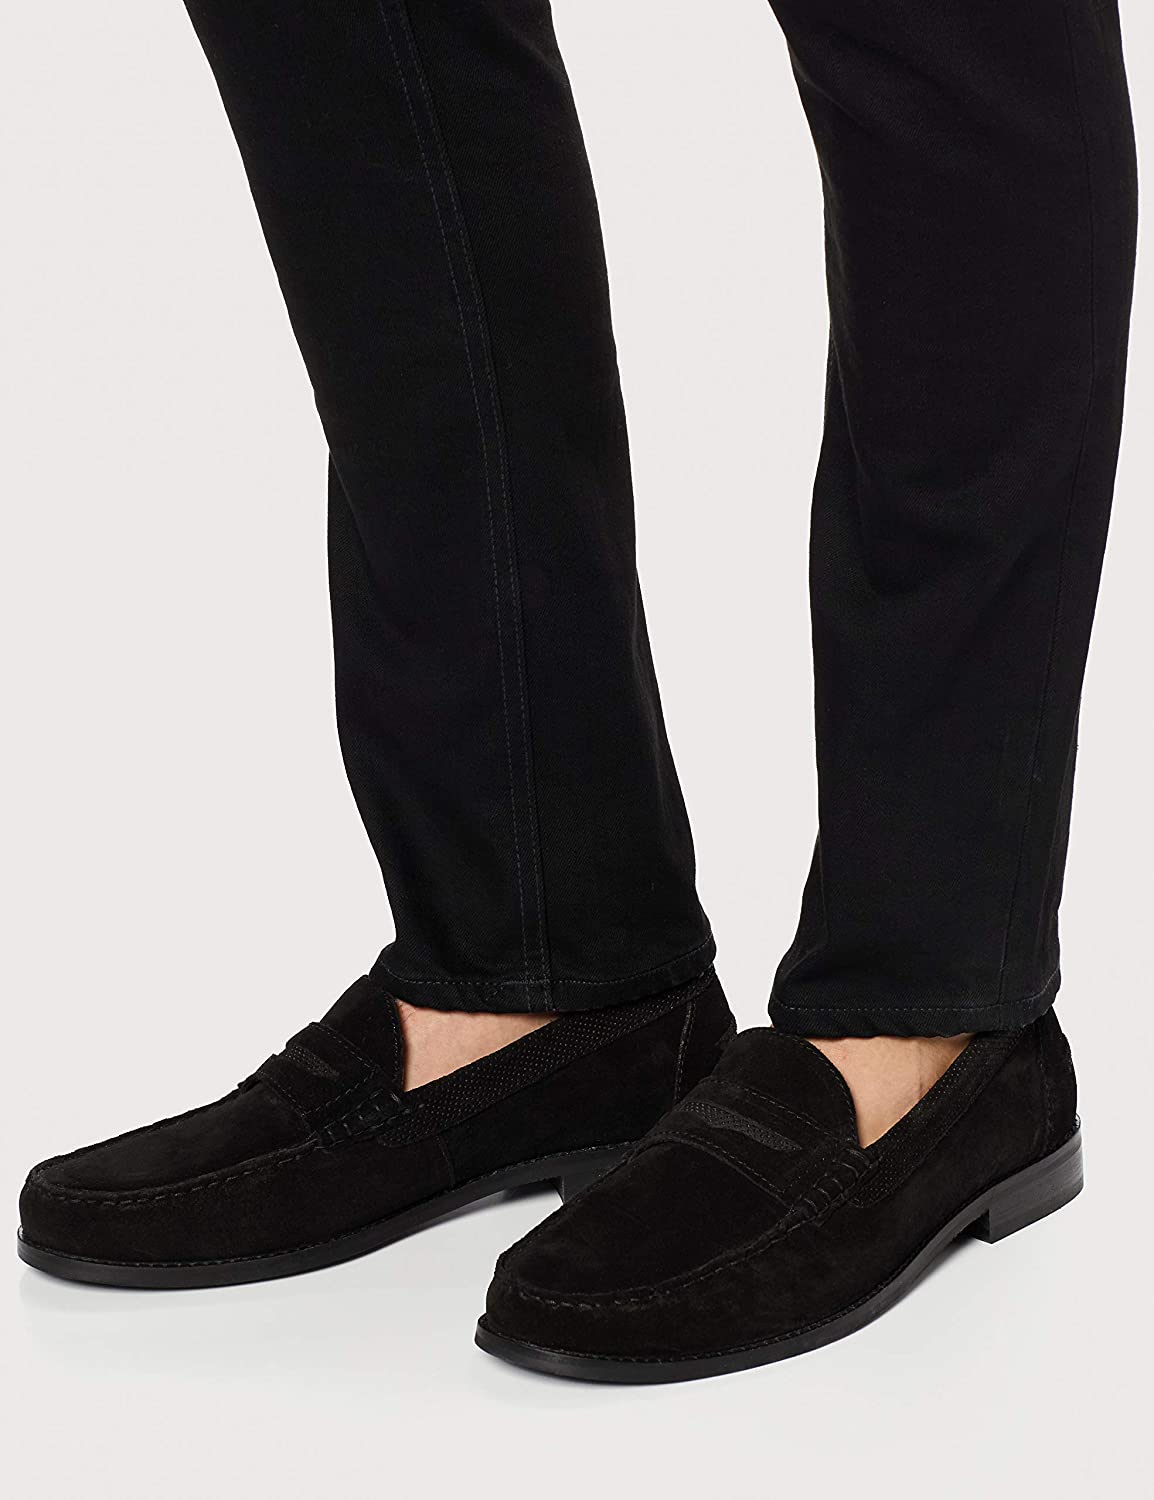 Brand - find. Men's Suede Penny Loafers, Black, Size 8.0 | eBay